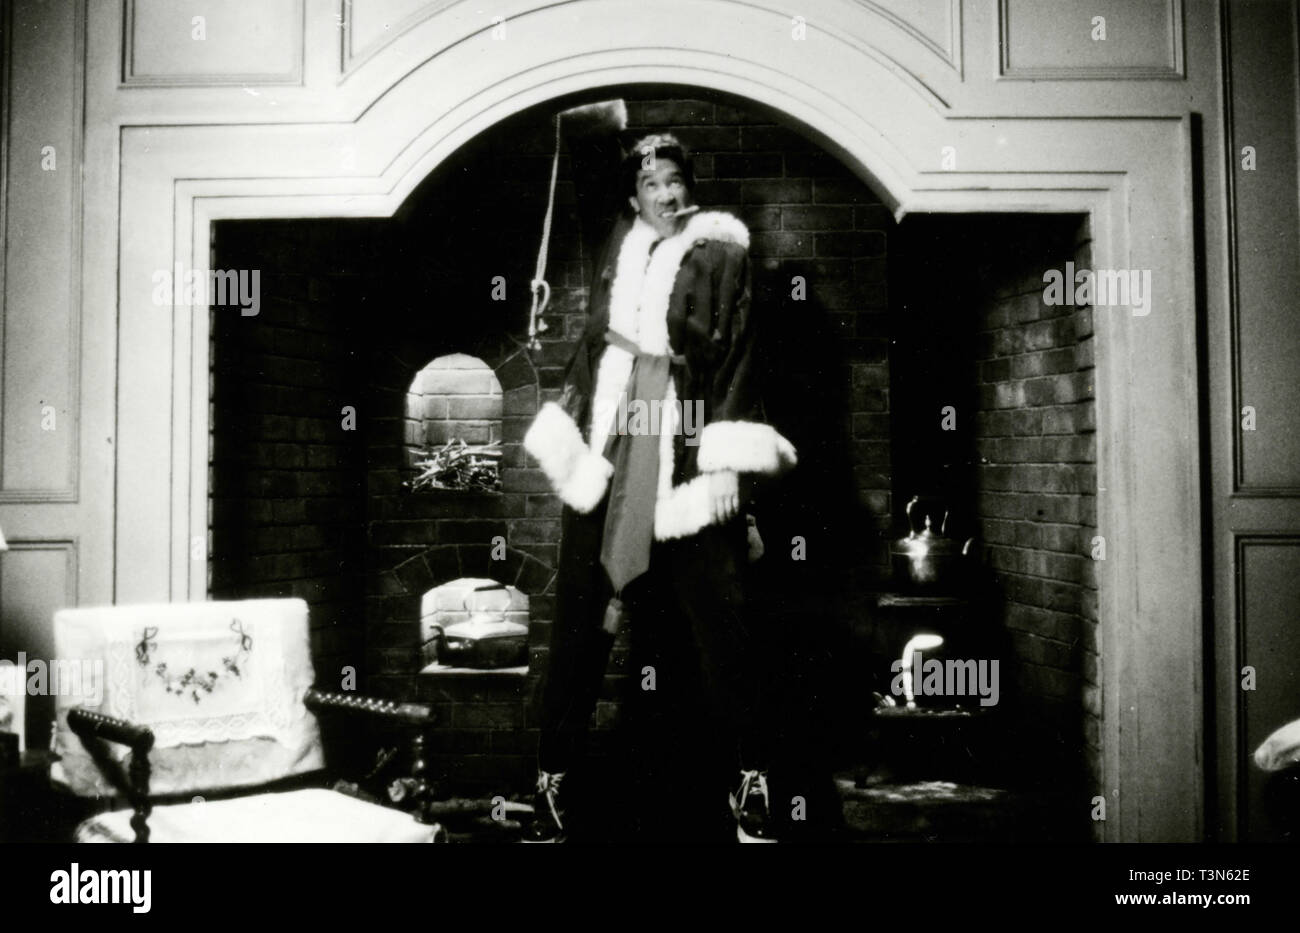 Actor Tim Allen in the movie Santa Clause, 1994 Stock Photo